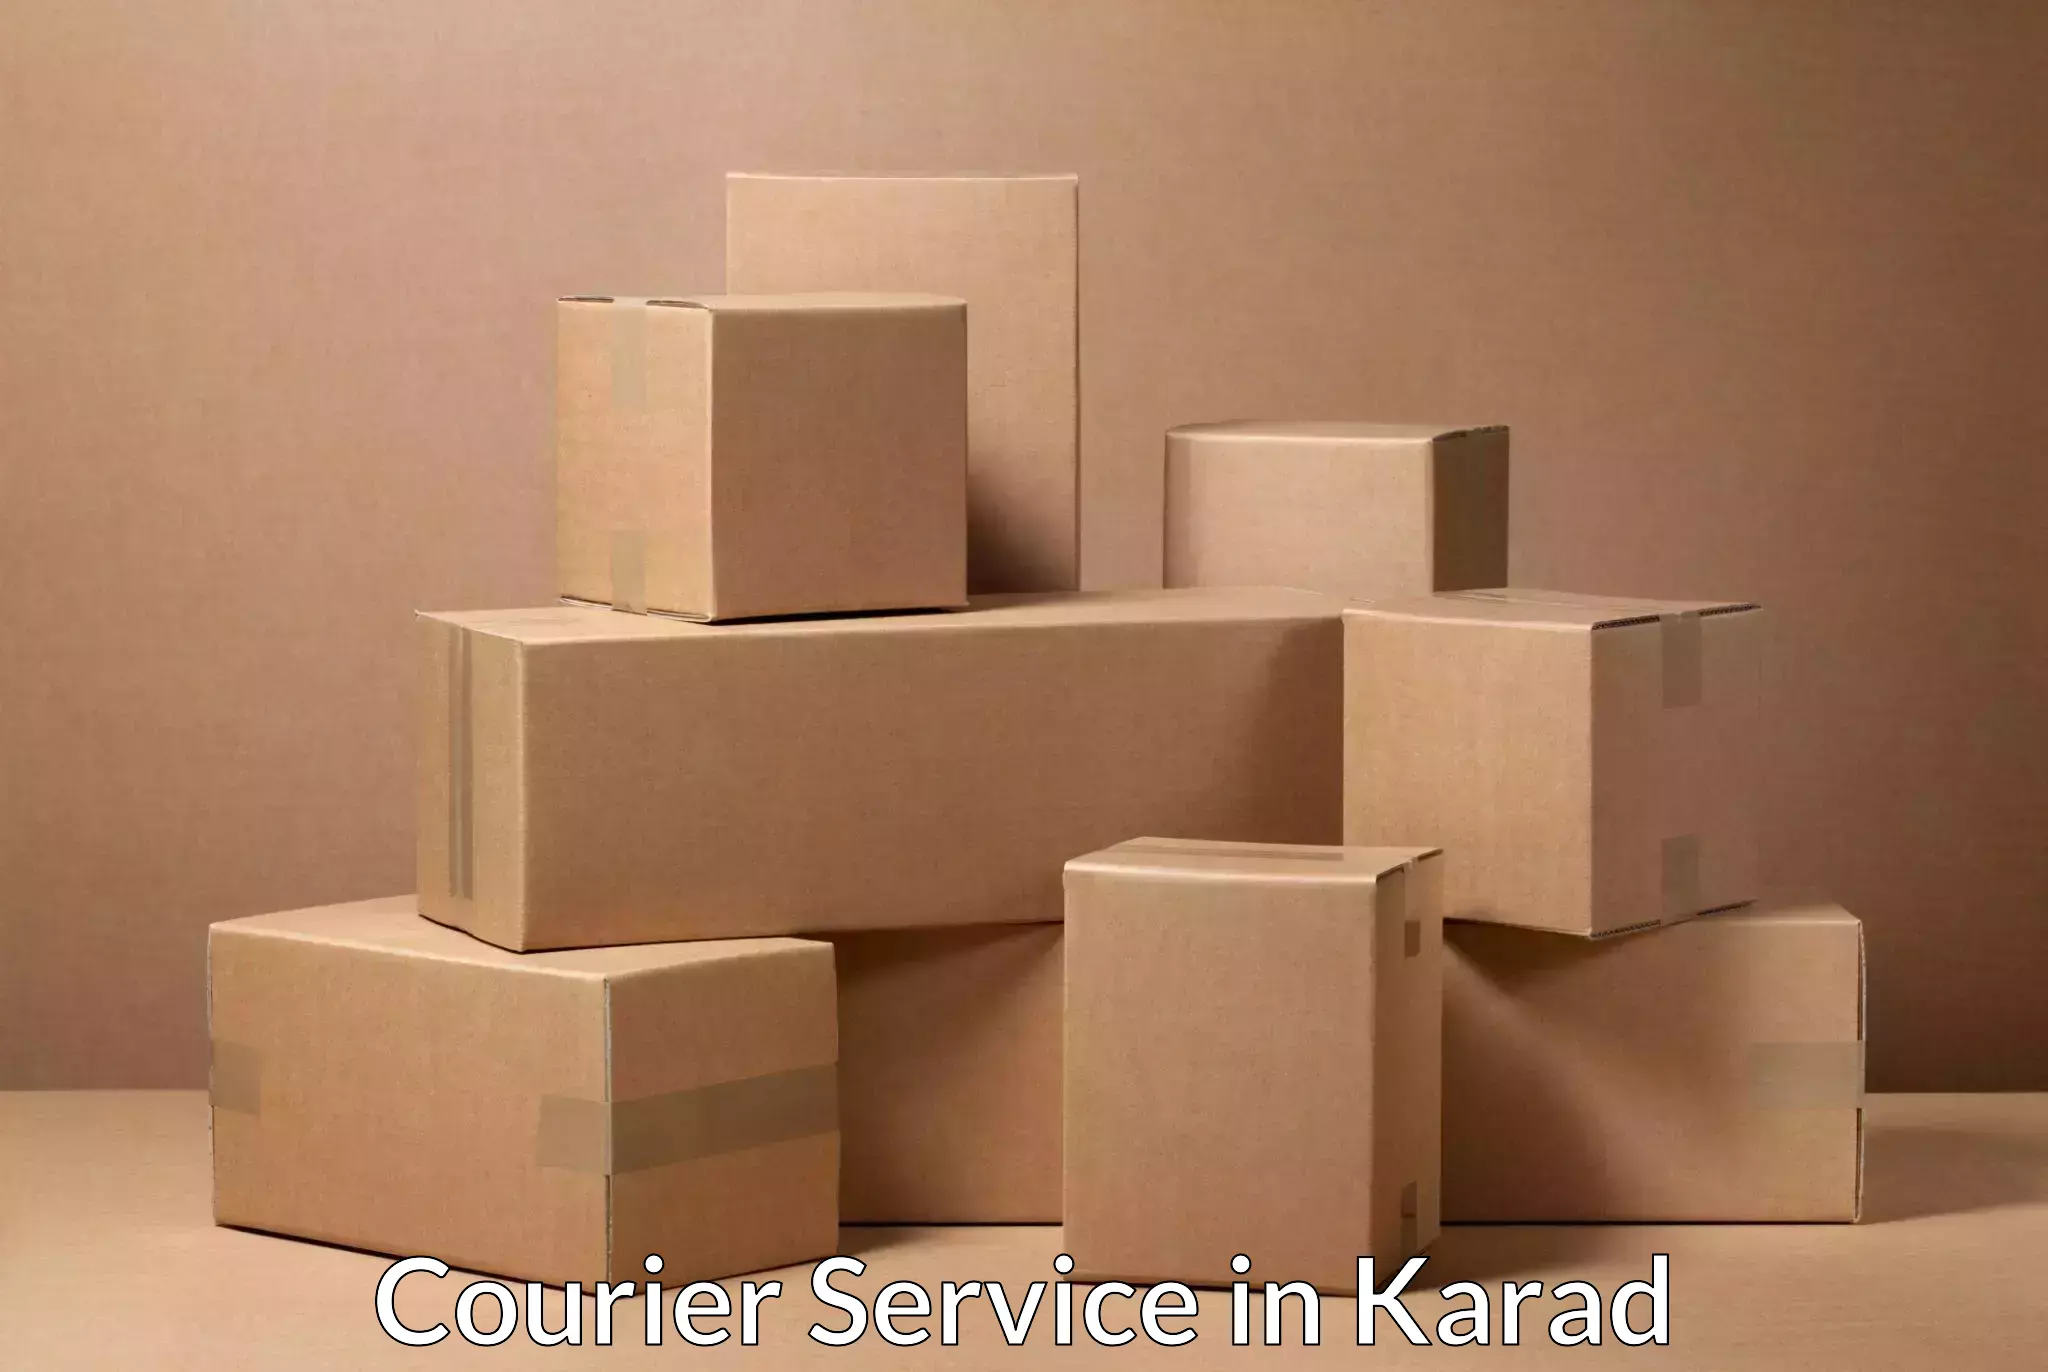 High-capacity shipping options in Karad